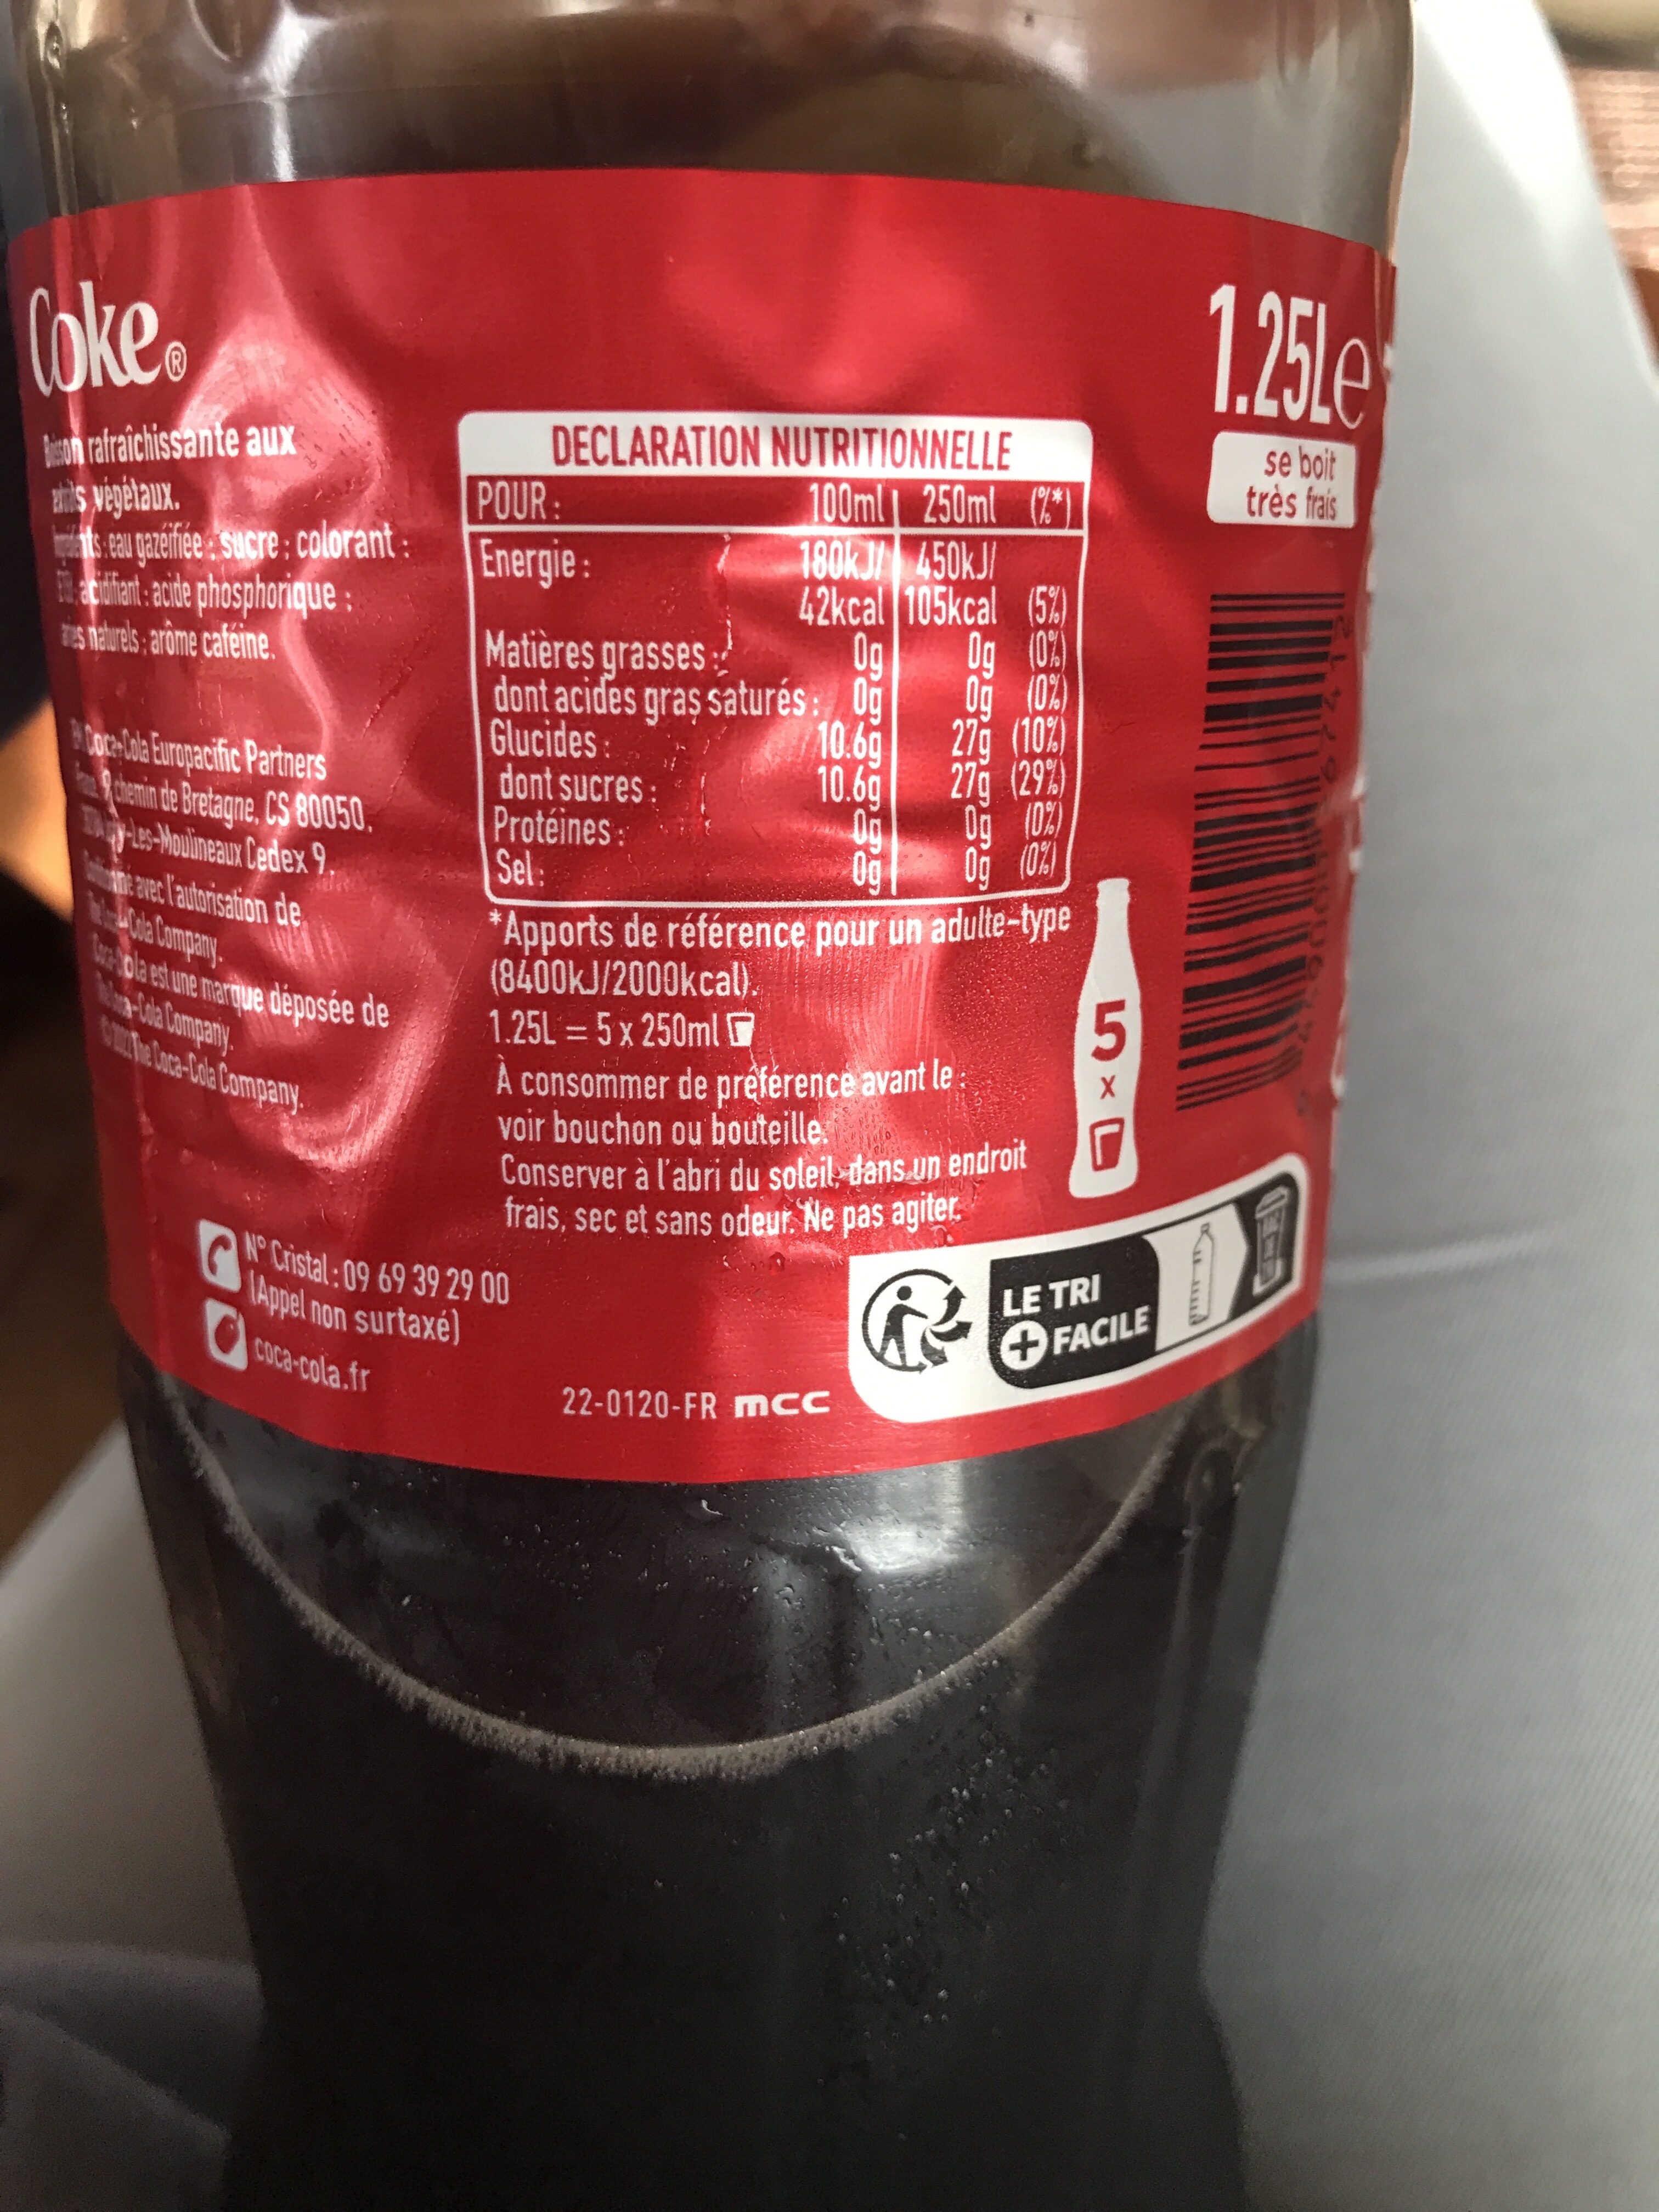 Coca Cola gout original - Nutrition facts - fr